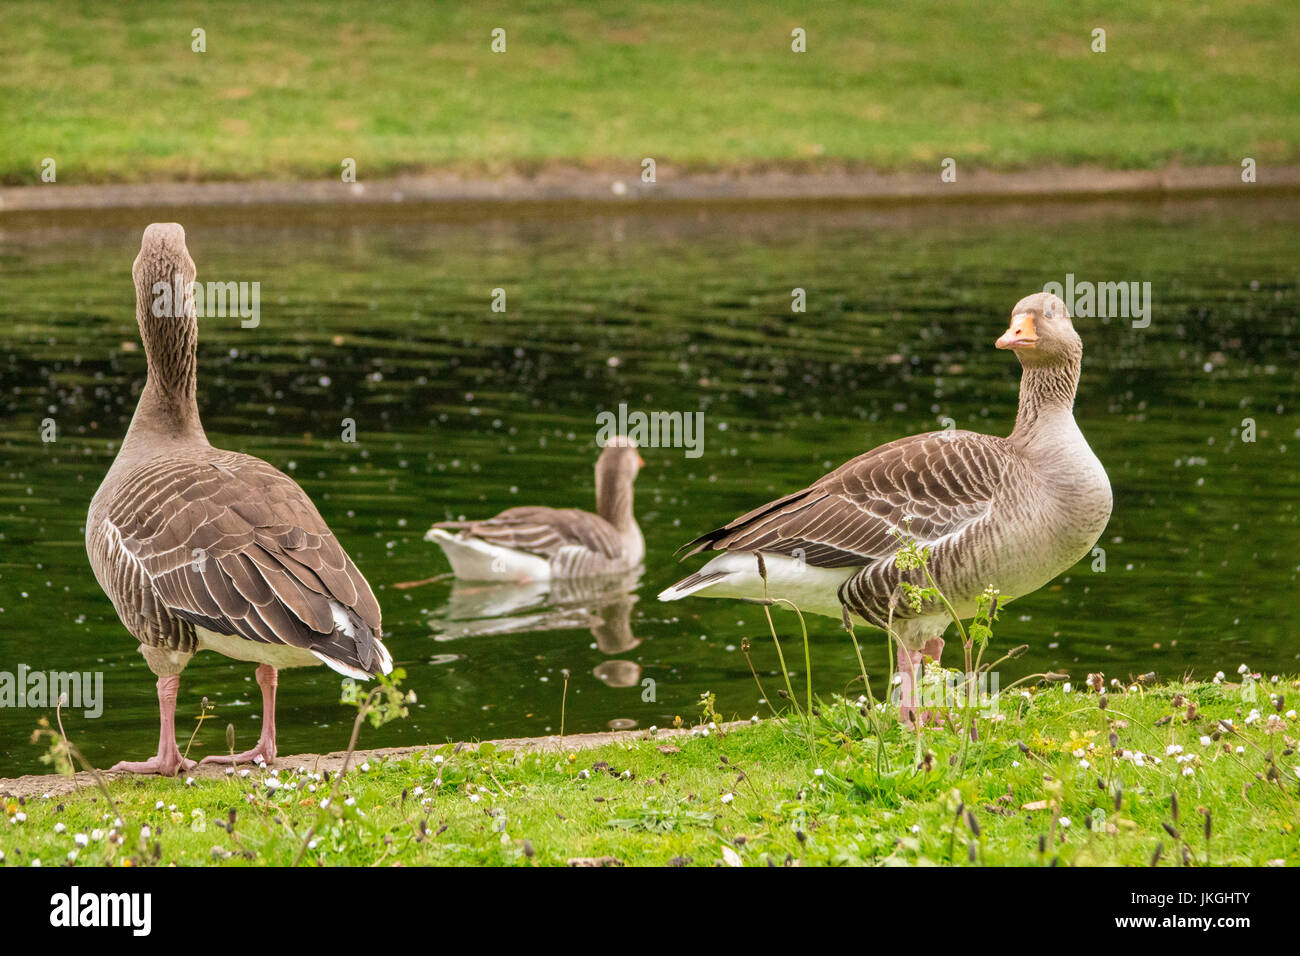 Three ducks in the park Stock Photo